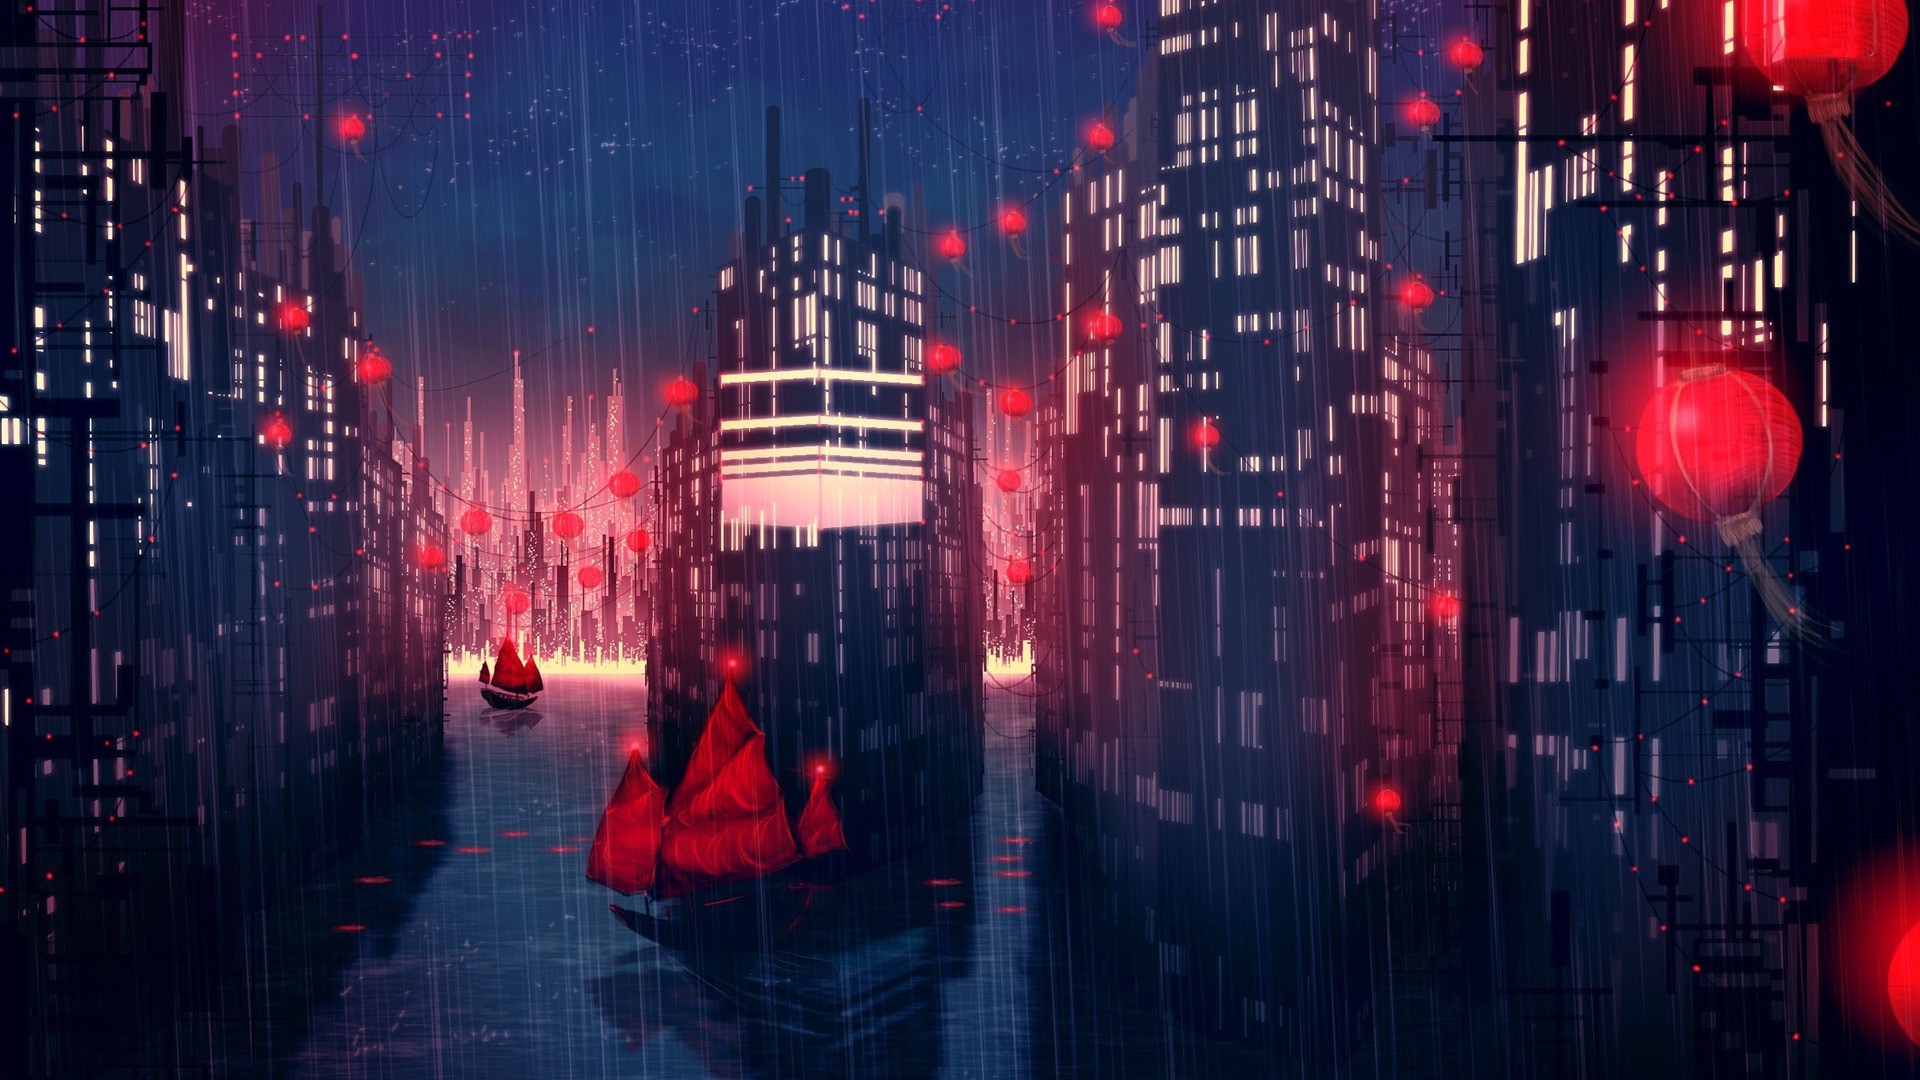 General 1920x1080 rain city artwork fantasy art concept art boat red science fiction cityscape night lantern